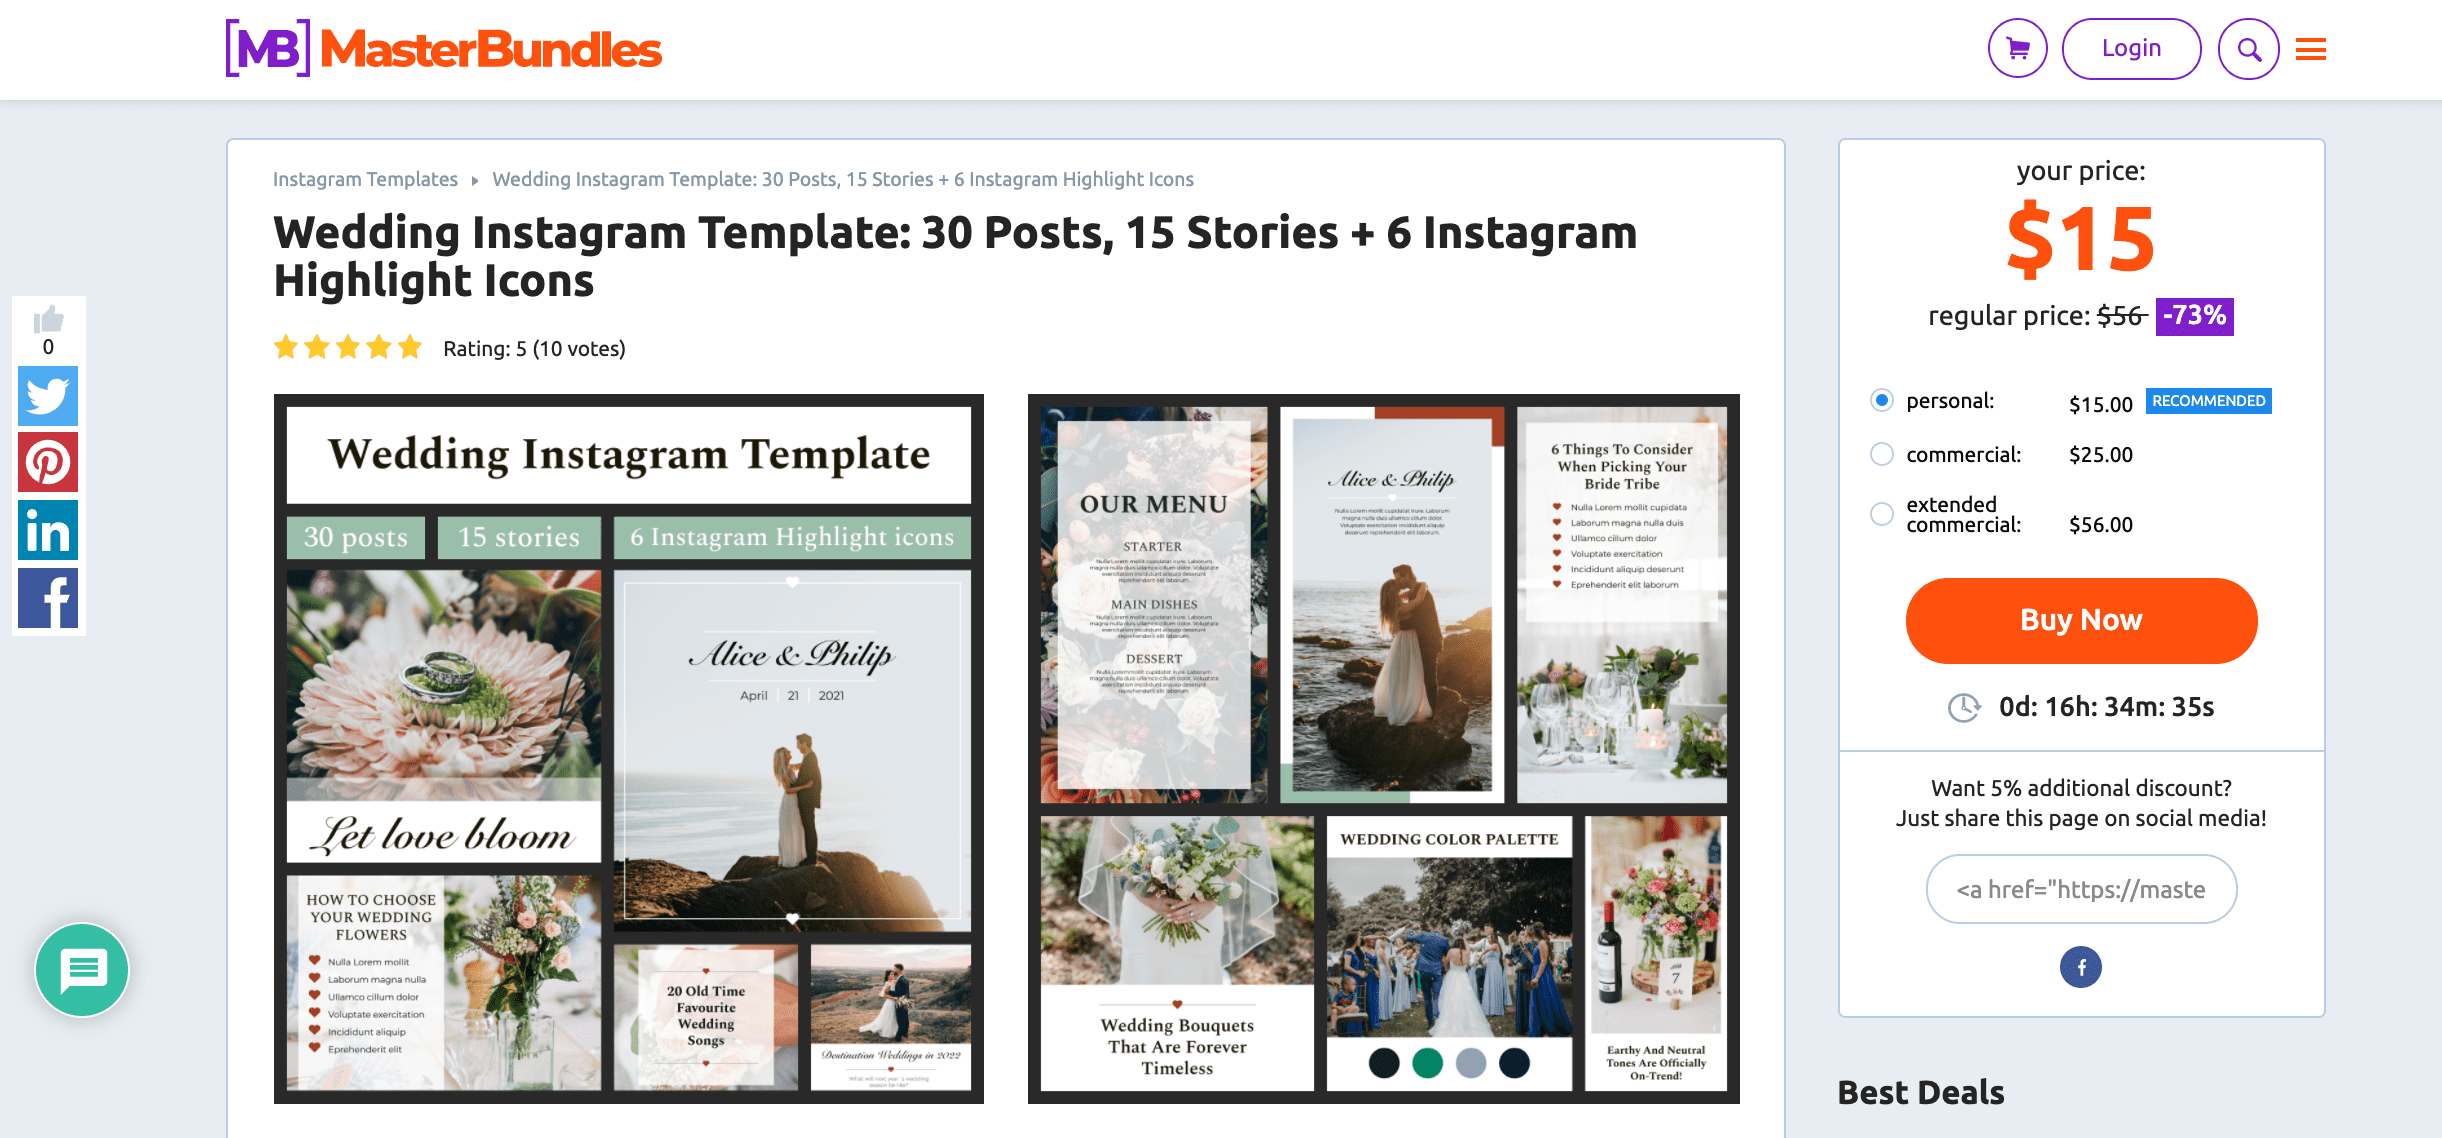 MasterBundles Wedding Instagram Template. Site Screenshot.